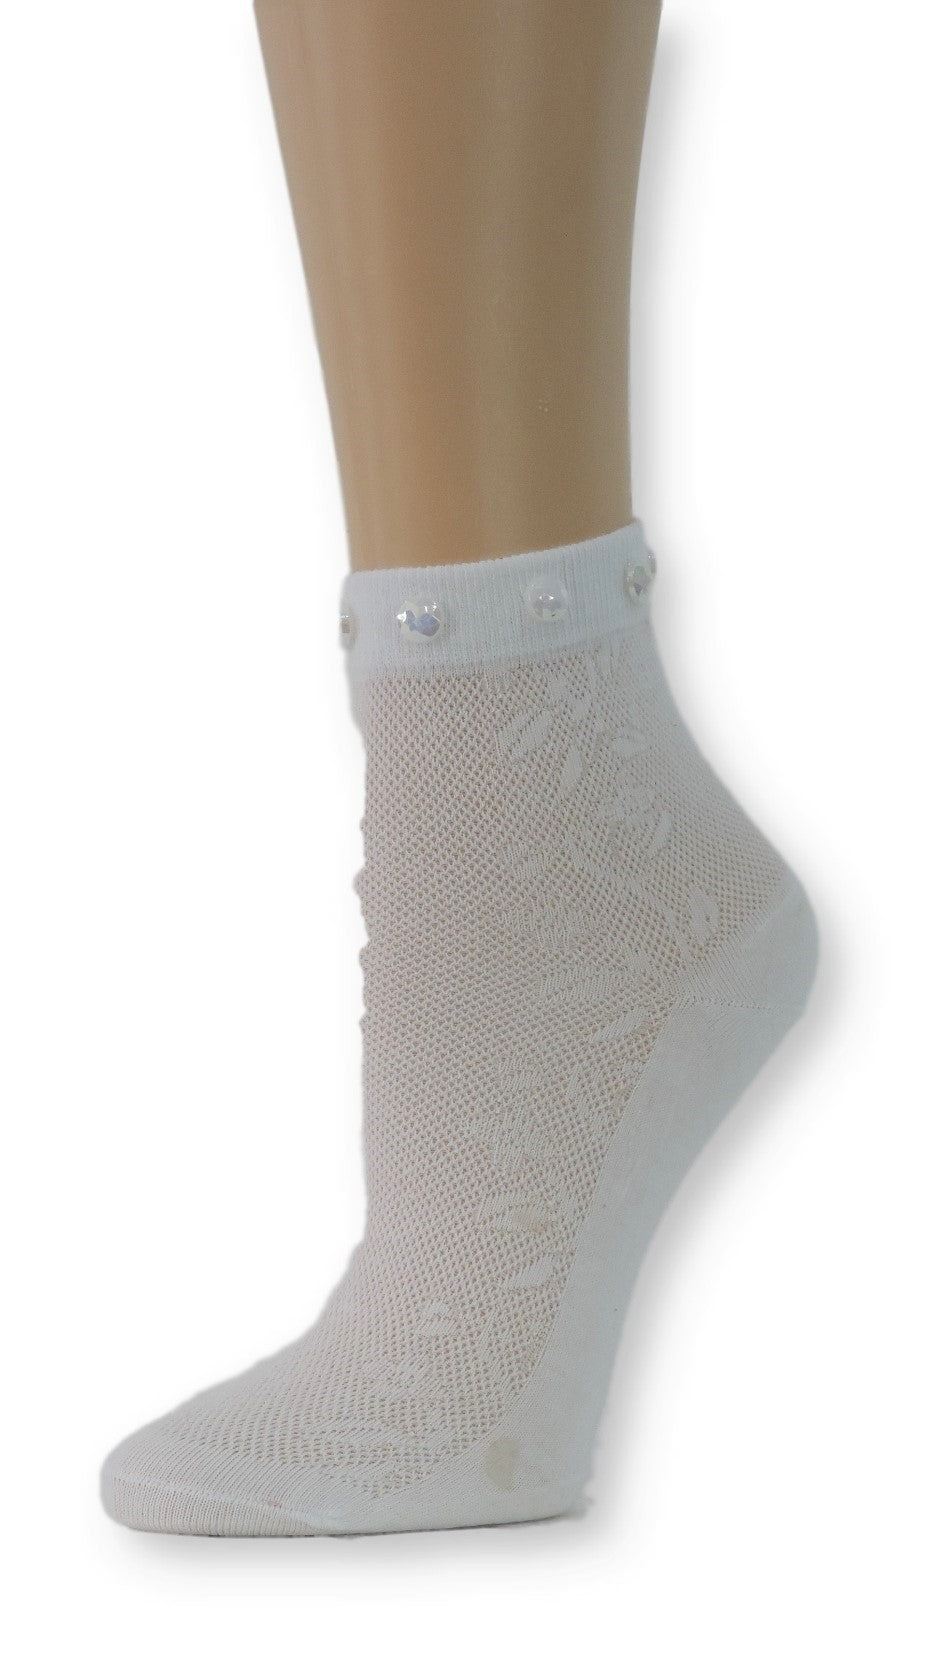 White Custom Sheer Socks with beads - Global Trendz Fashion®